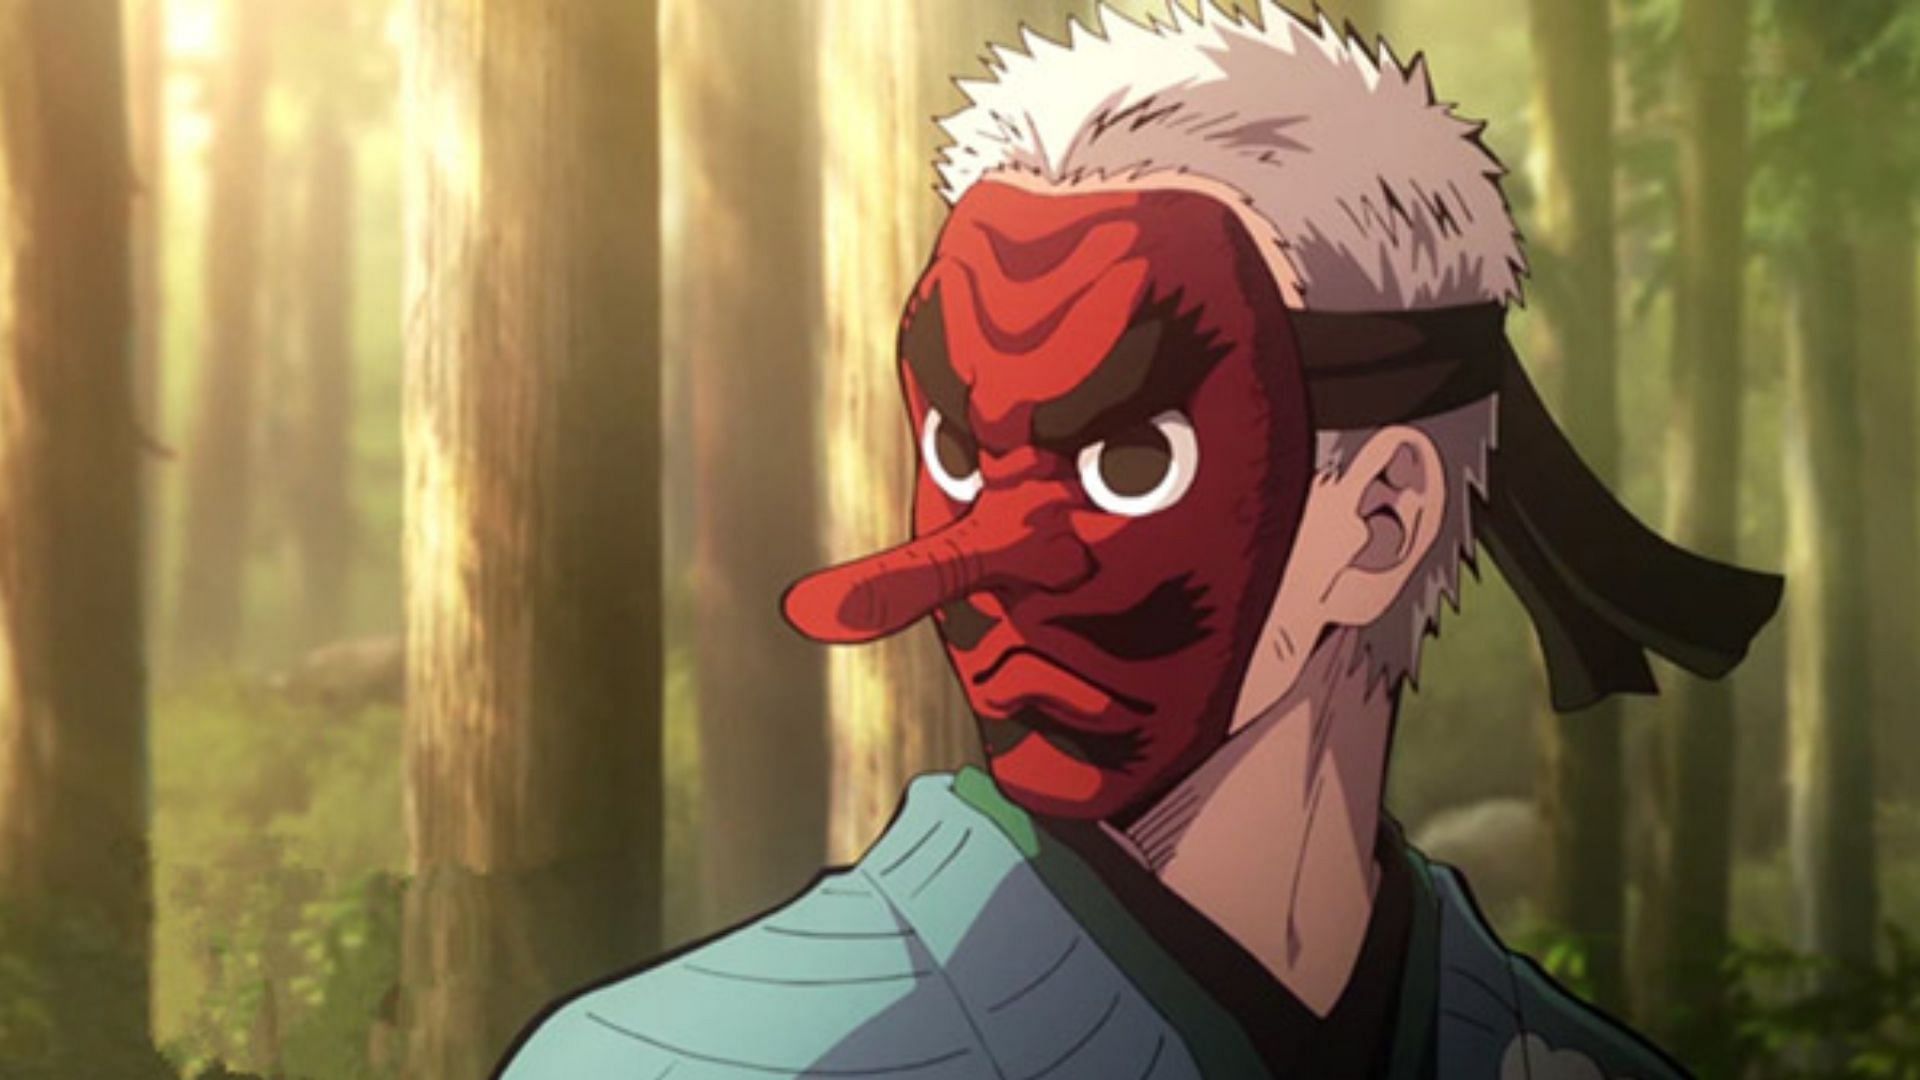 One thing i DISLIKE about tanjiro as a character : r/KimetsuNoYaiba